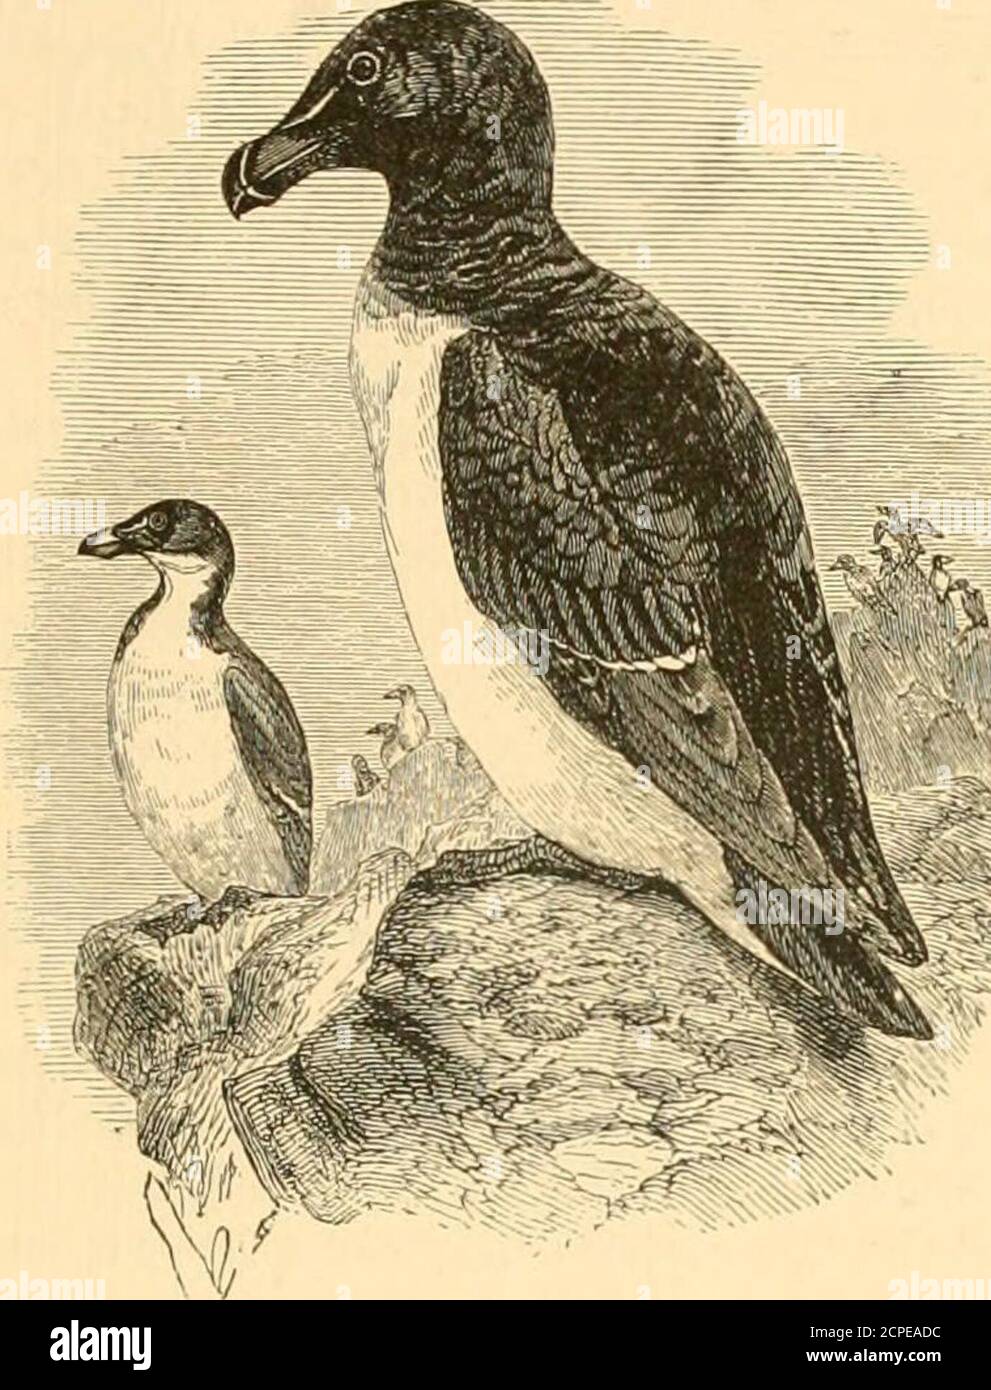 . The water birds of North America . common toboth sides of the North Atlantic. Ale a torda. THE EAZOR-BILLED AUK. Aha torda, Linn. S. N. I. 175S, 130 (adult) ; ed. 12,1. 1766, 210. —Aud. Orn. Biog. III. 1S35, 112 ; V. 1839, 428, pi. 214. —Cass, in Bairds B. N. Am. 1858, 901. — BAIBD, Cat. N. Am. li. 1859, no. 711. — COHES, Check List, 1873, no. 616.Utamania torda, Leach, Stephenss Gen. Zool. -XIII. 1825, 27. — Coues, Pr. Ac. Nat. Sci. Philad. 1868, 18; Key, 1S72, 340; 2.1 Check List, 1SS2, no. 877. — Kidgw. Norn. N. Am. B. 1881, no. 742.Aha pica, Linn. S. N. I. 1766, 210 (young, or winter plu Stock Photo